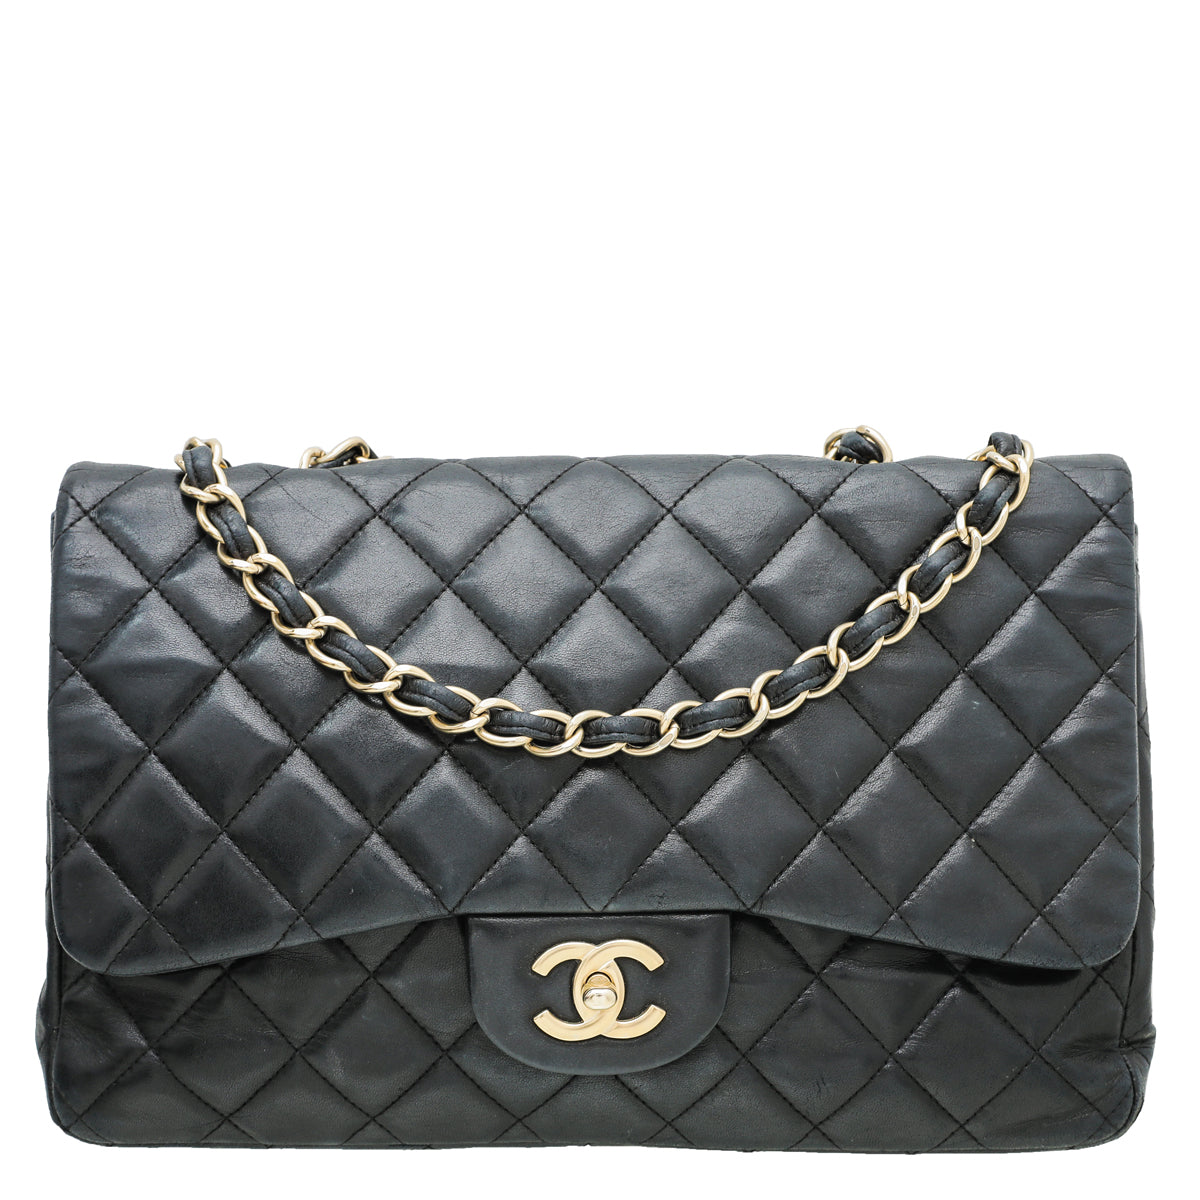 Chanel Black CC Classic Single Flap Bag